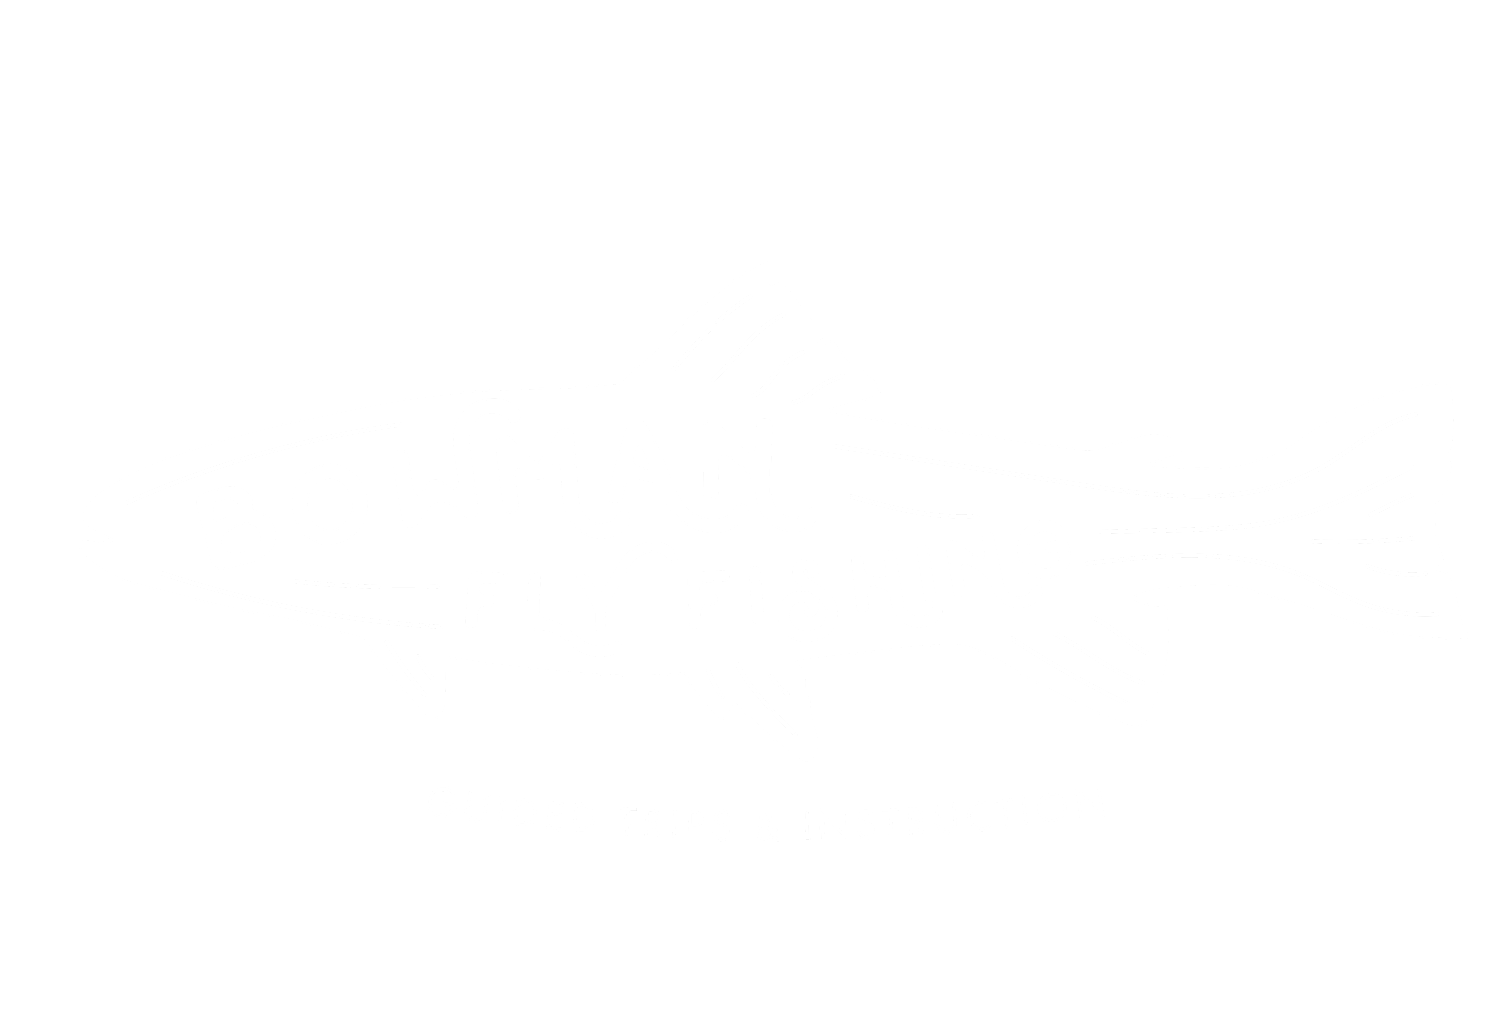 Bowman Fly Fishing